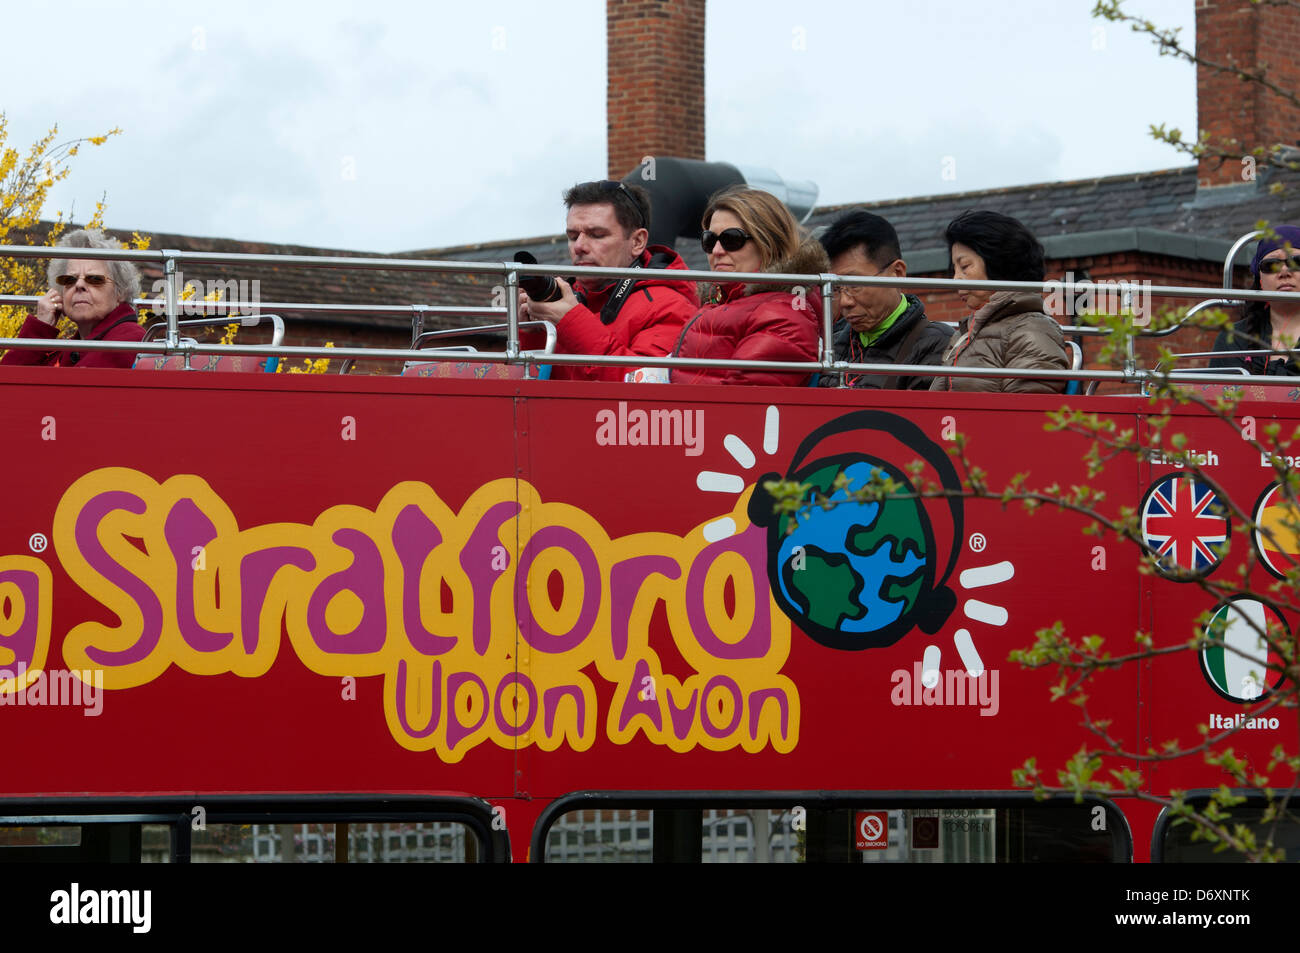 Open top bus, Stratford-upon-Avon, UK Stock Photo